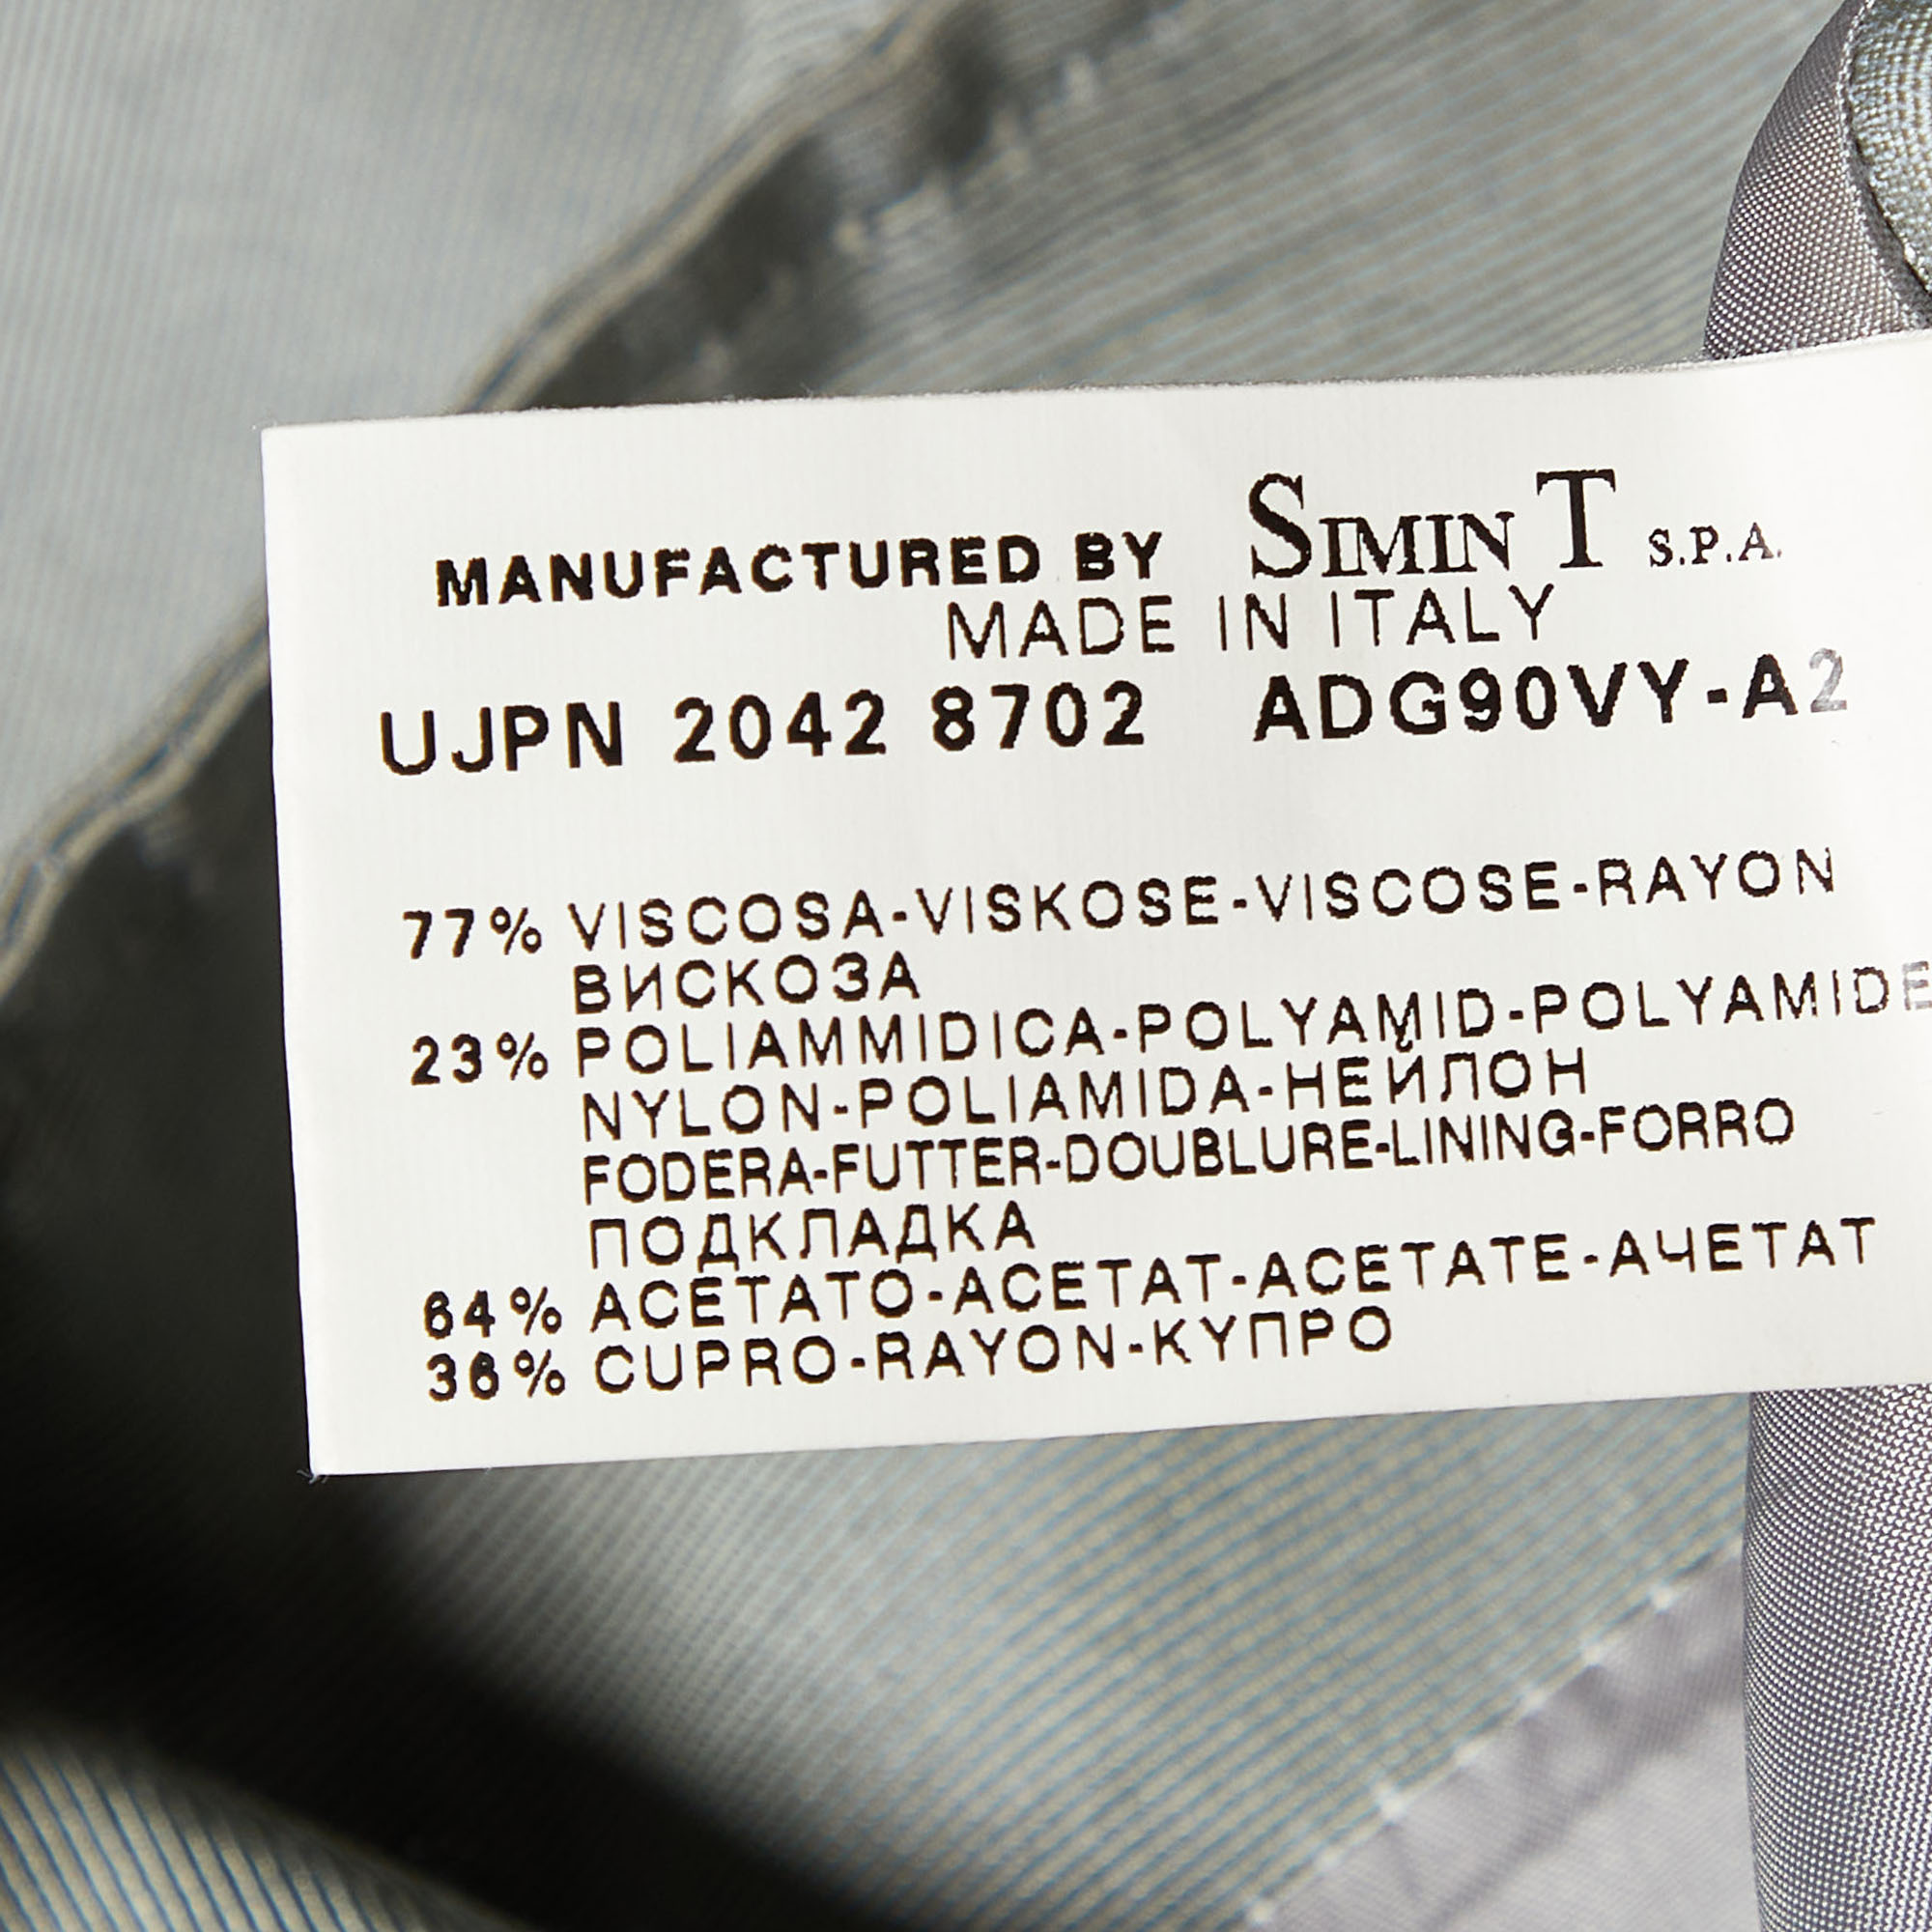 Emporio Armani Grey Jacquard Maxi Skirt M